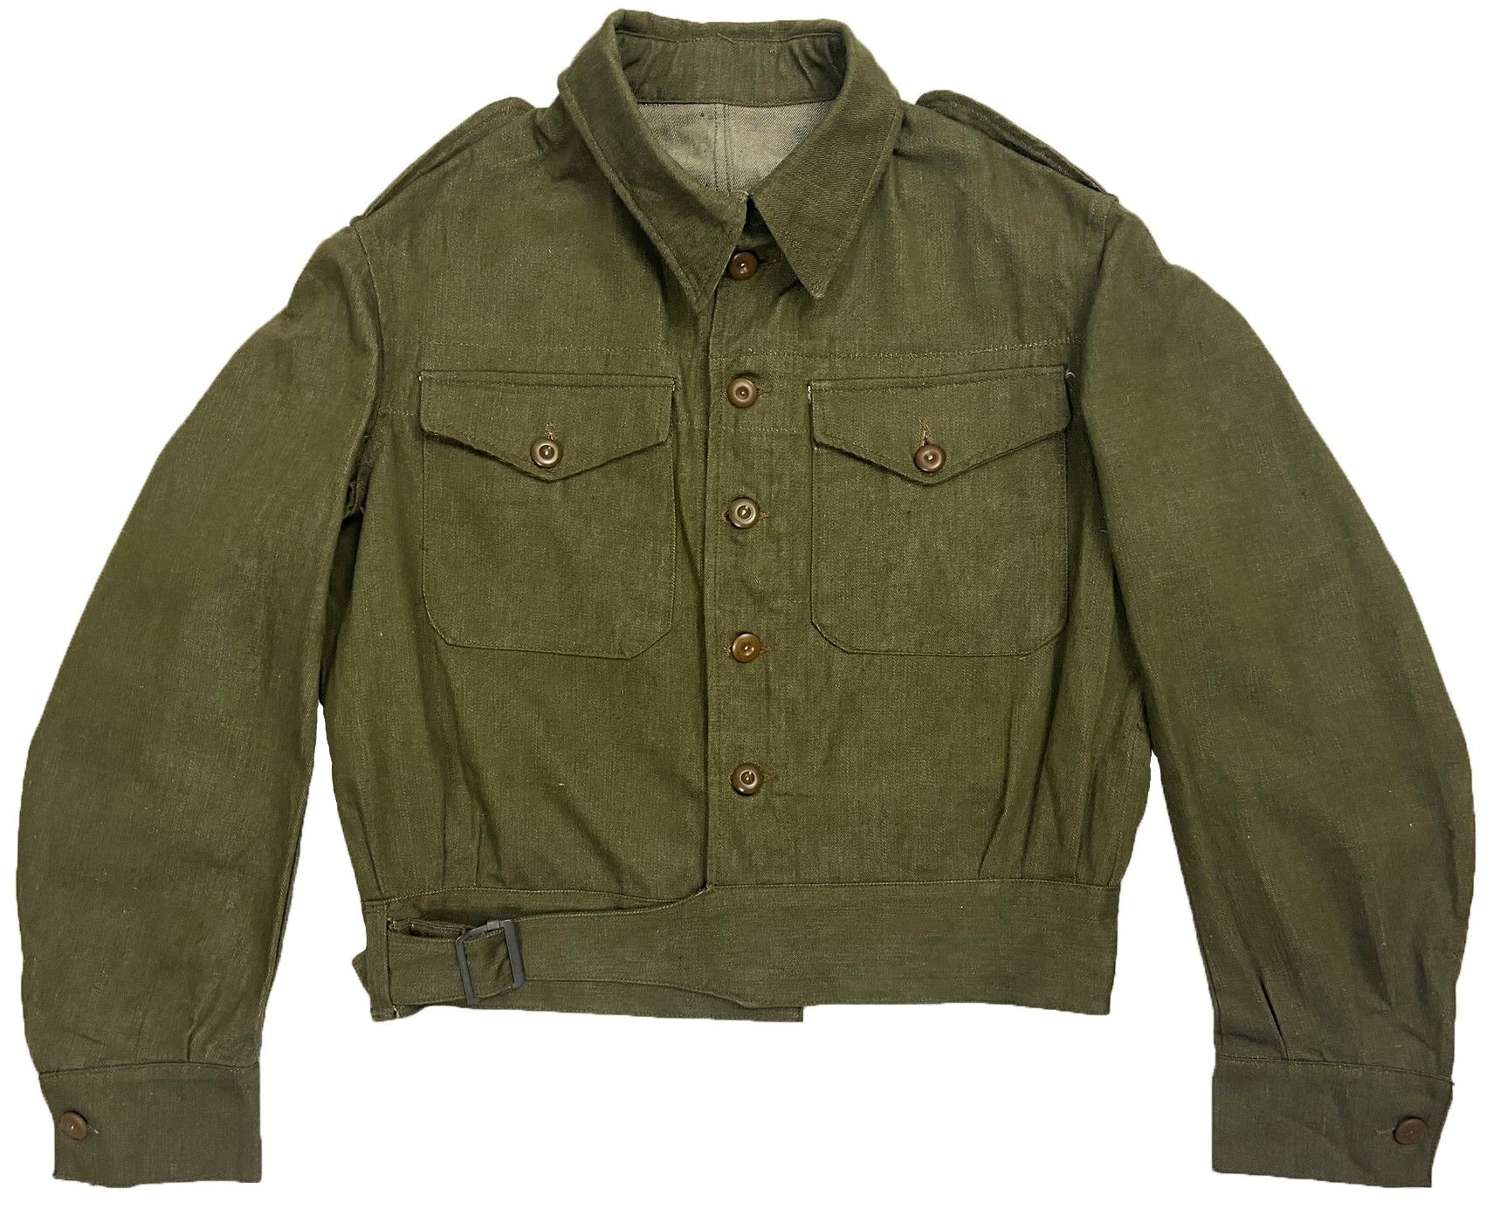 Original 1953 Dated British Army Denim Battledress Blouse - Size 9